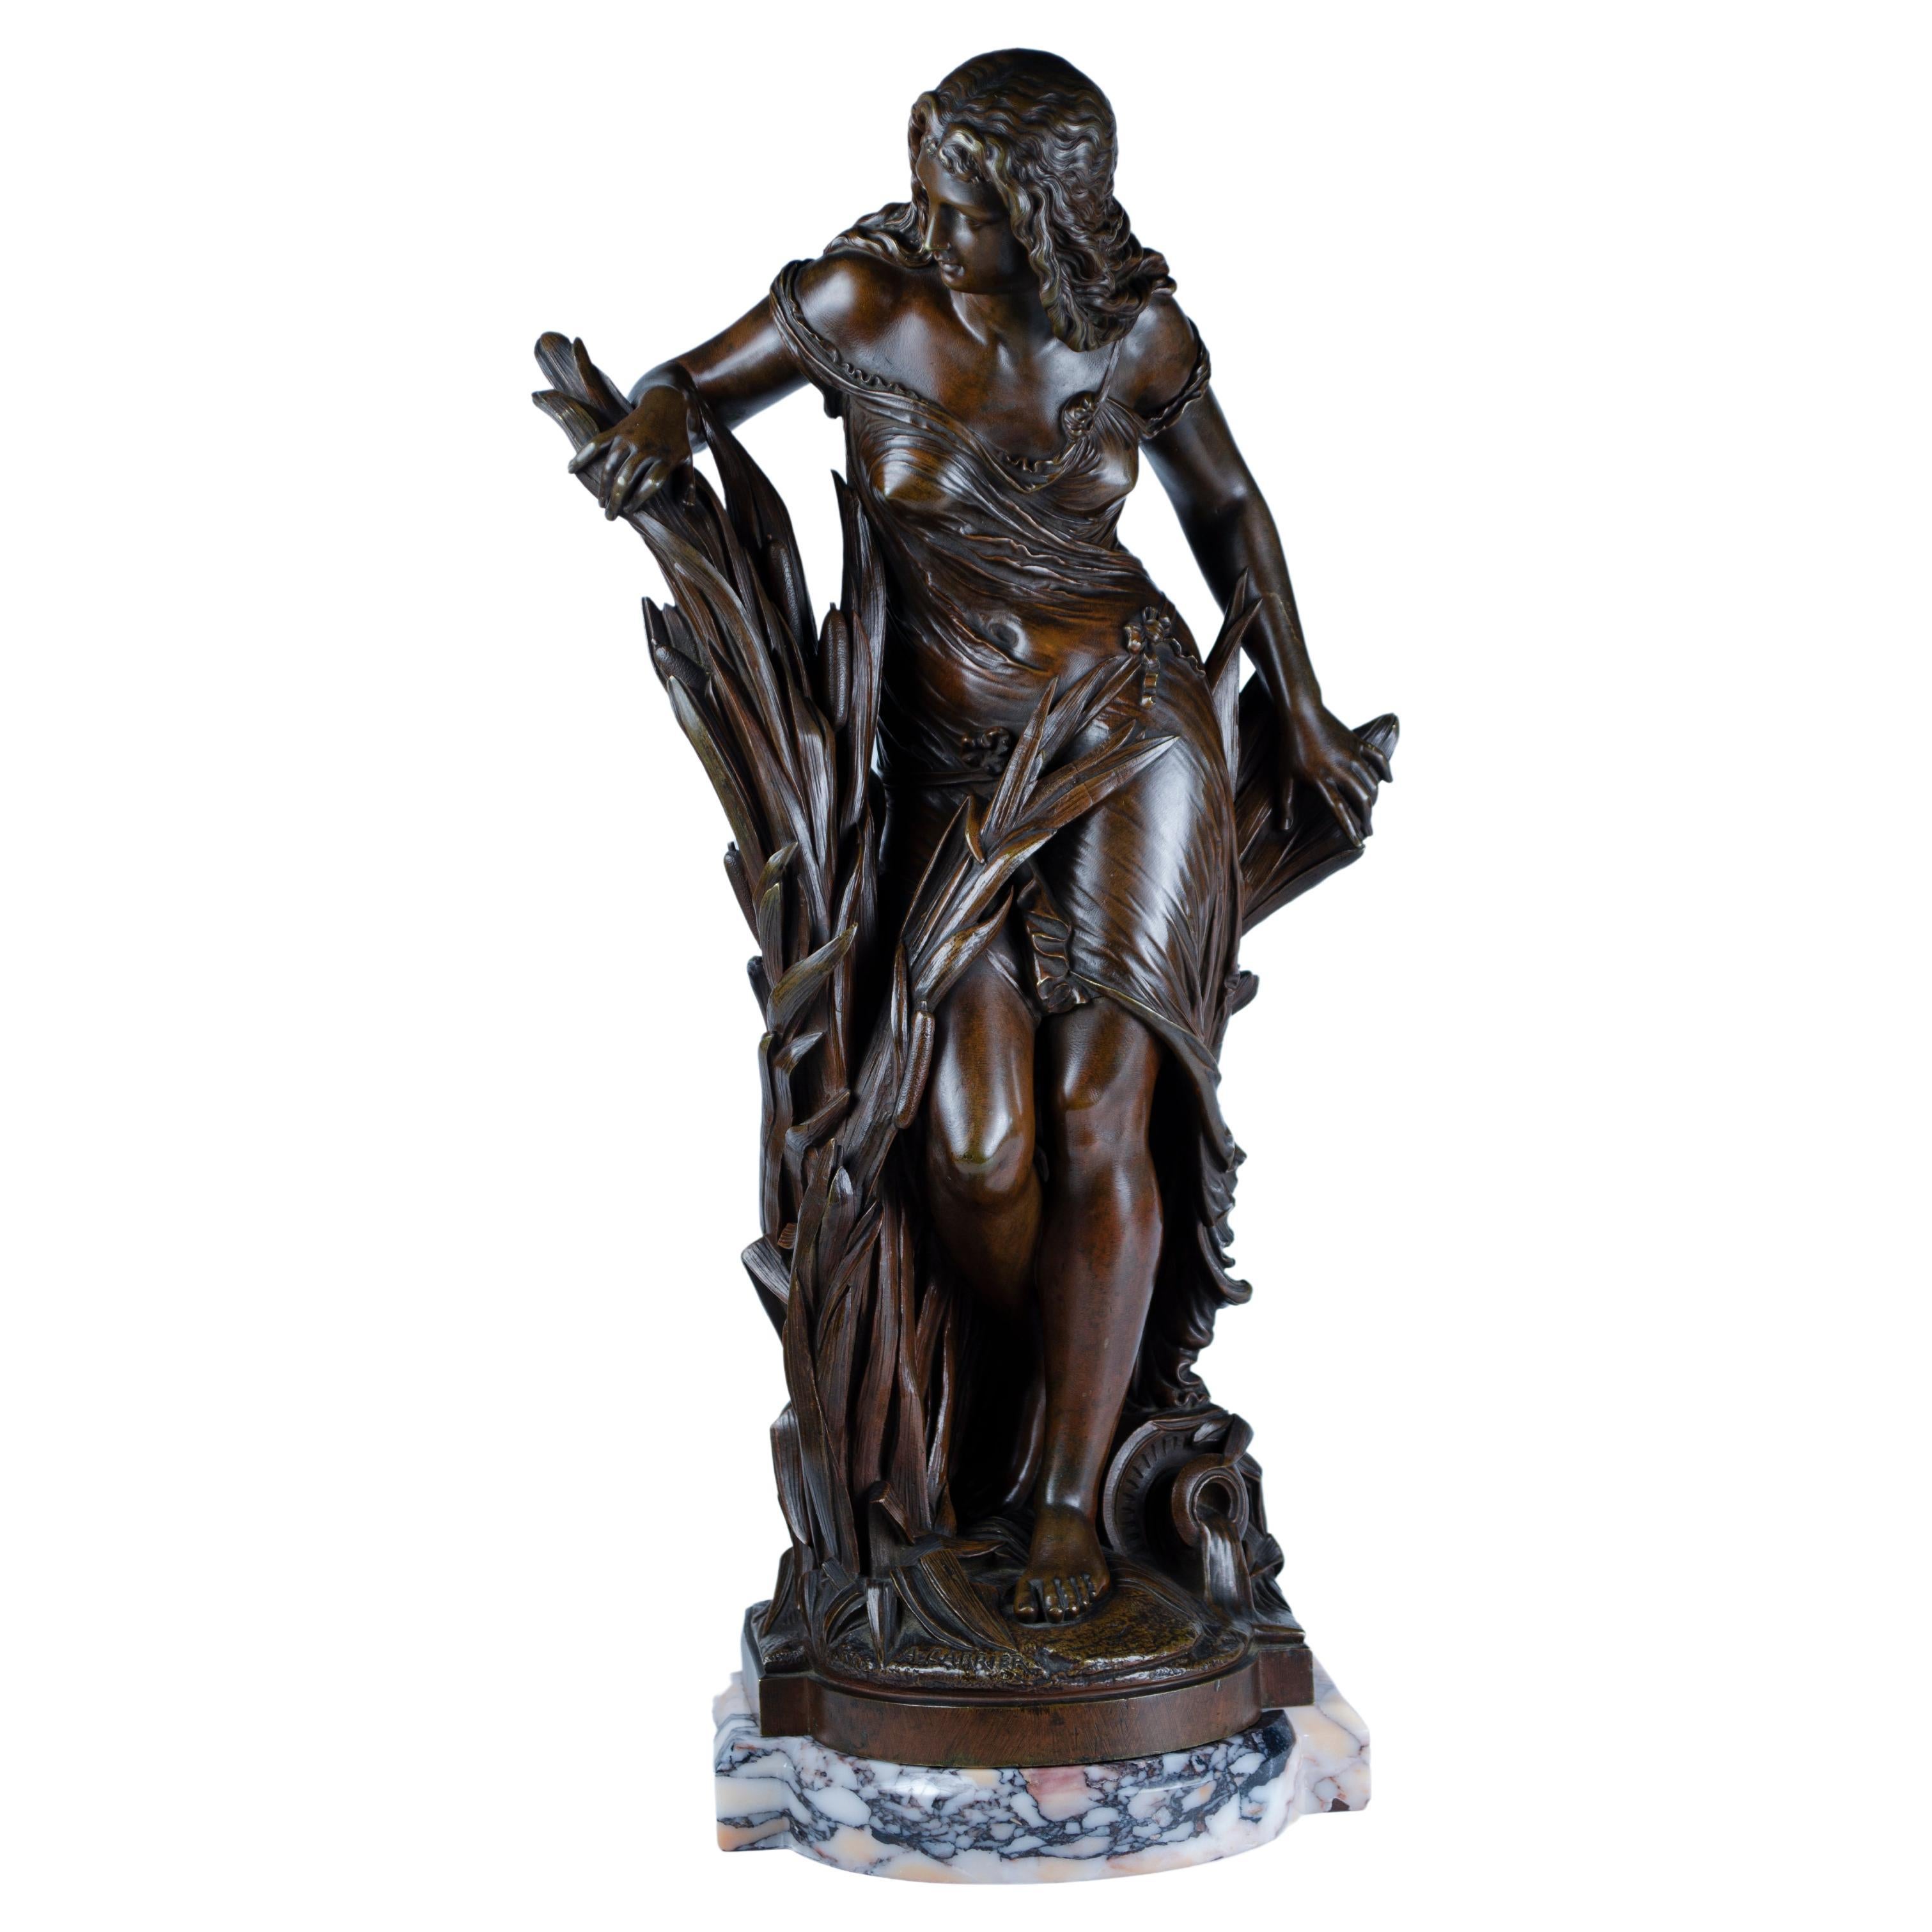 Bronze Sculpture "Nymph in the Reeds" by Albert-Ernest Carrier-Belleuse